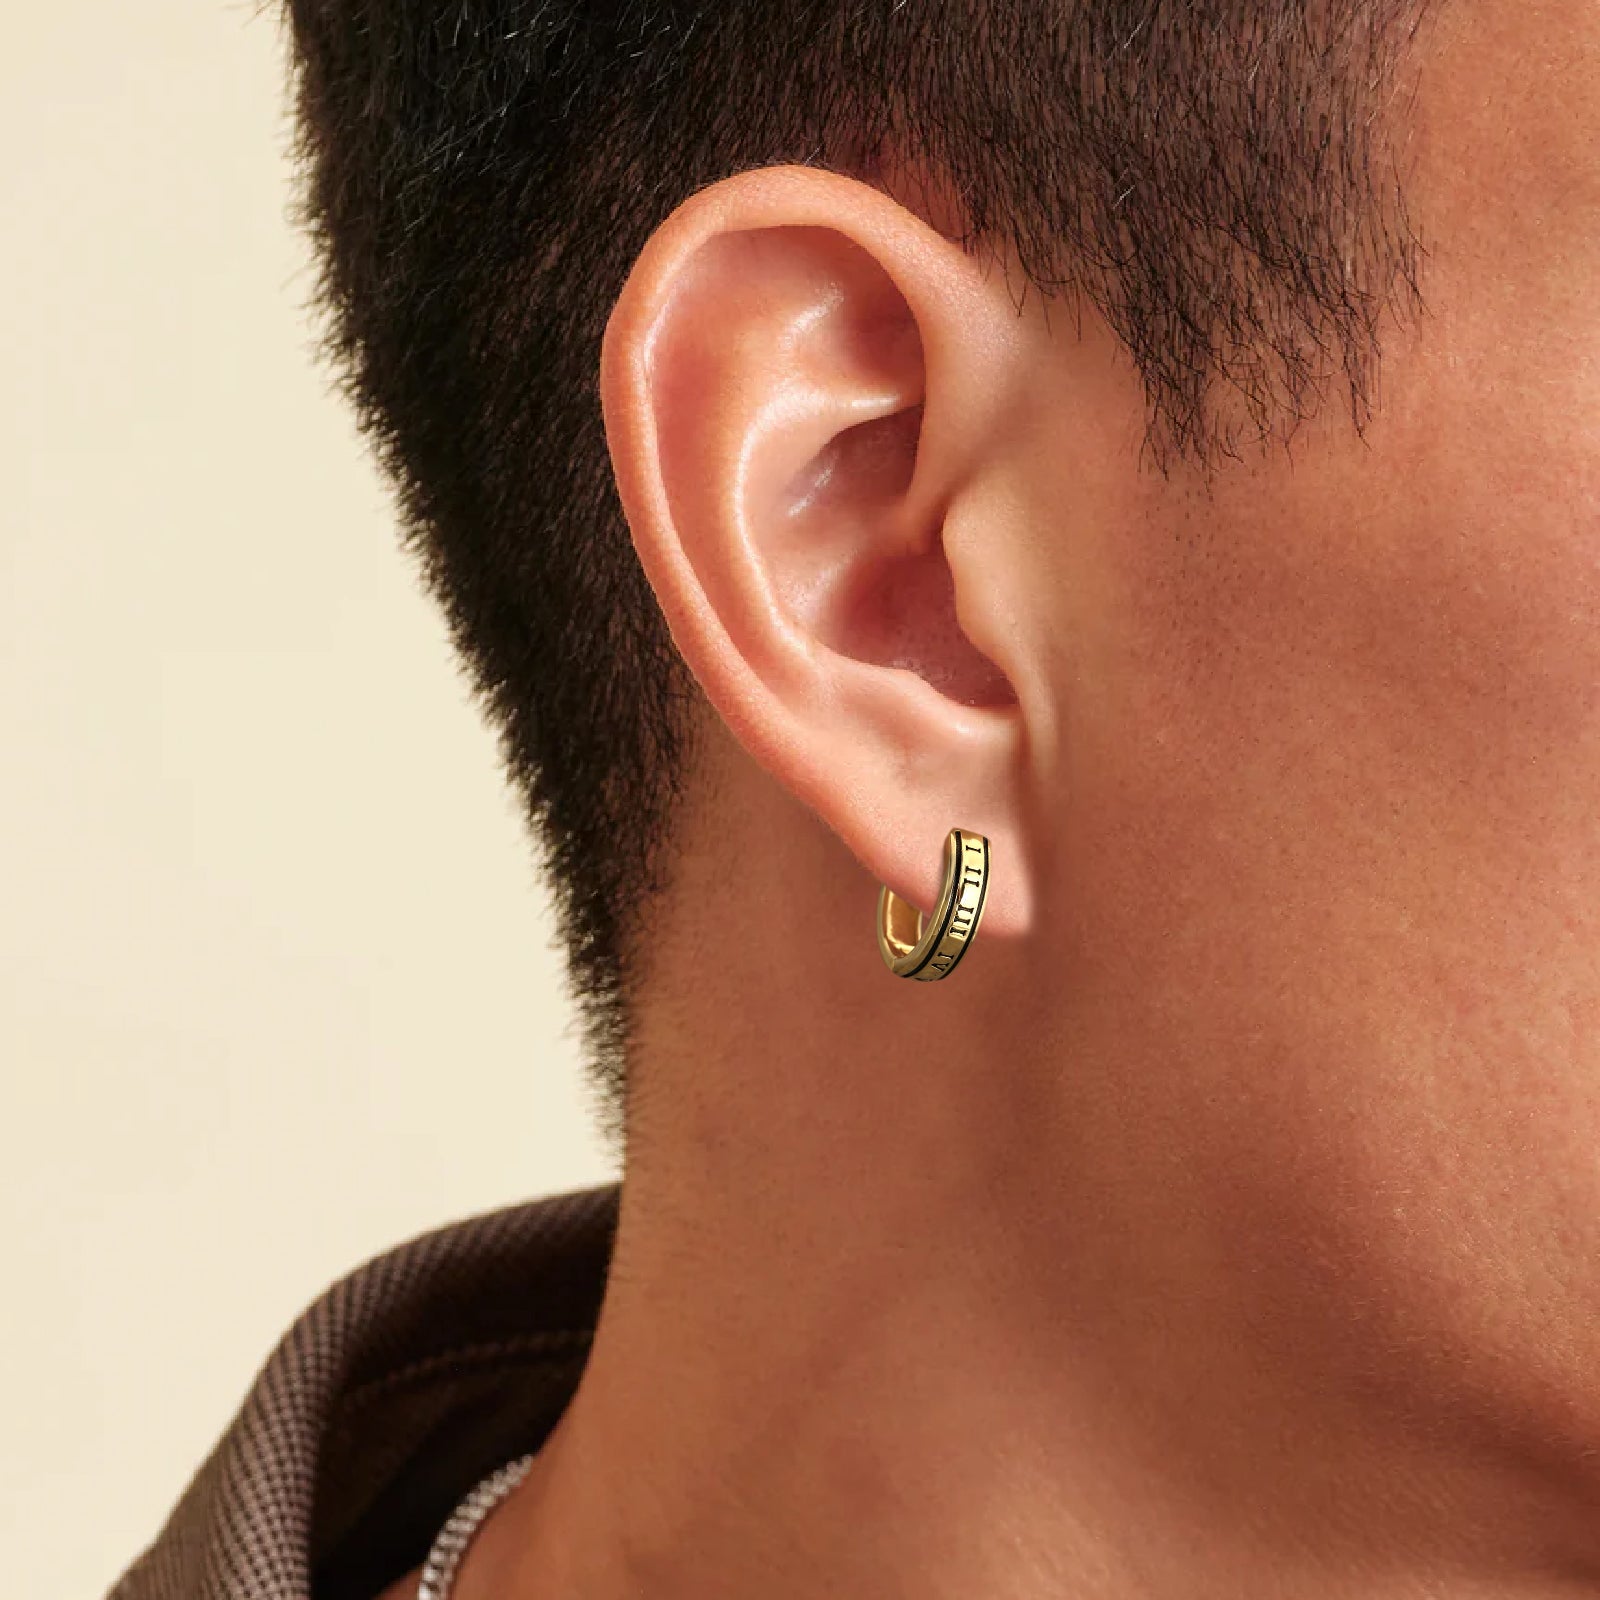 Wholesale Men's Earrings 15mm Black Roman Numerals Hoop Earrings for Men